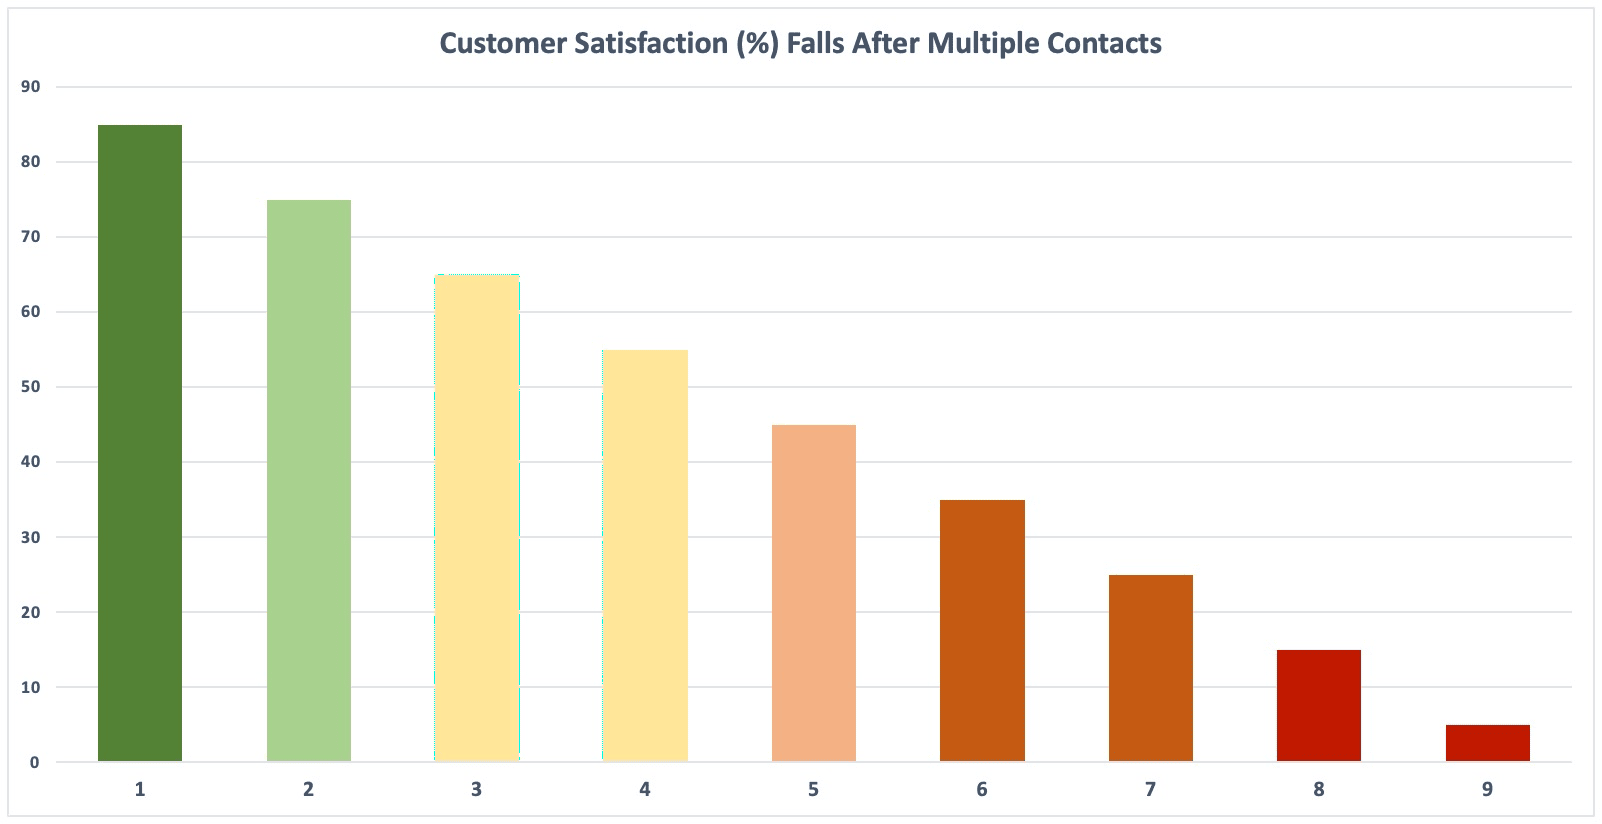 SQM data on customer satisfaction